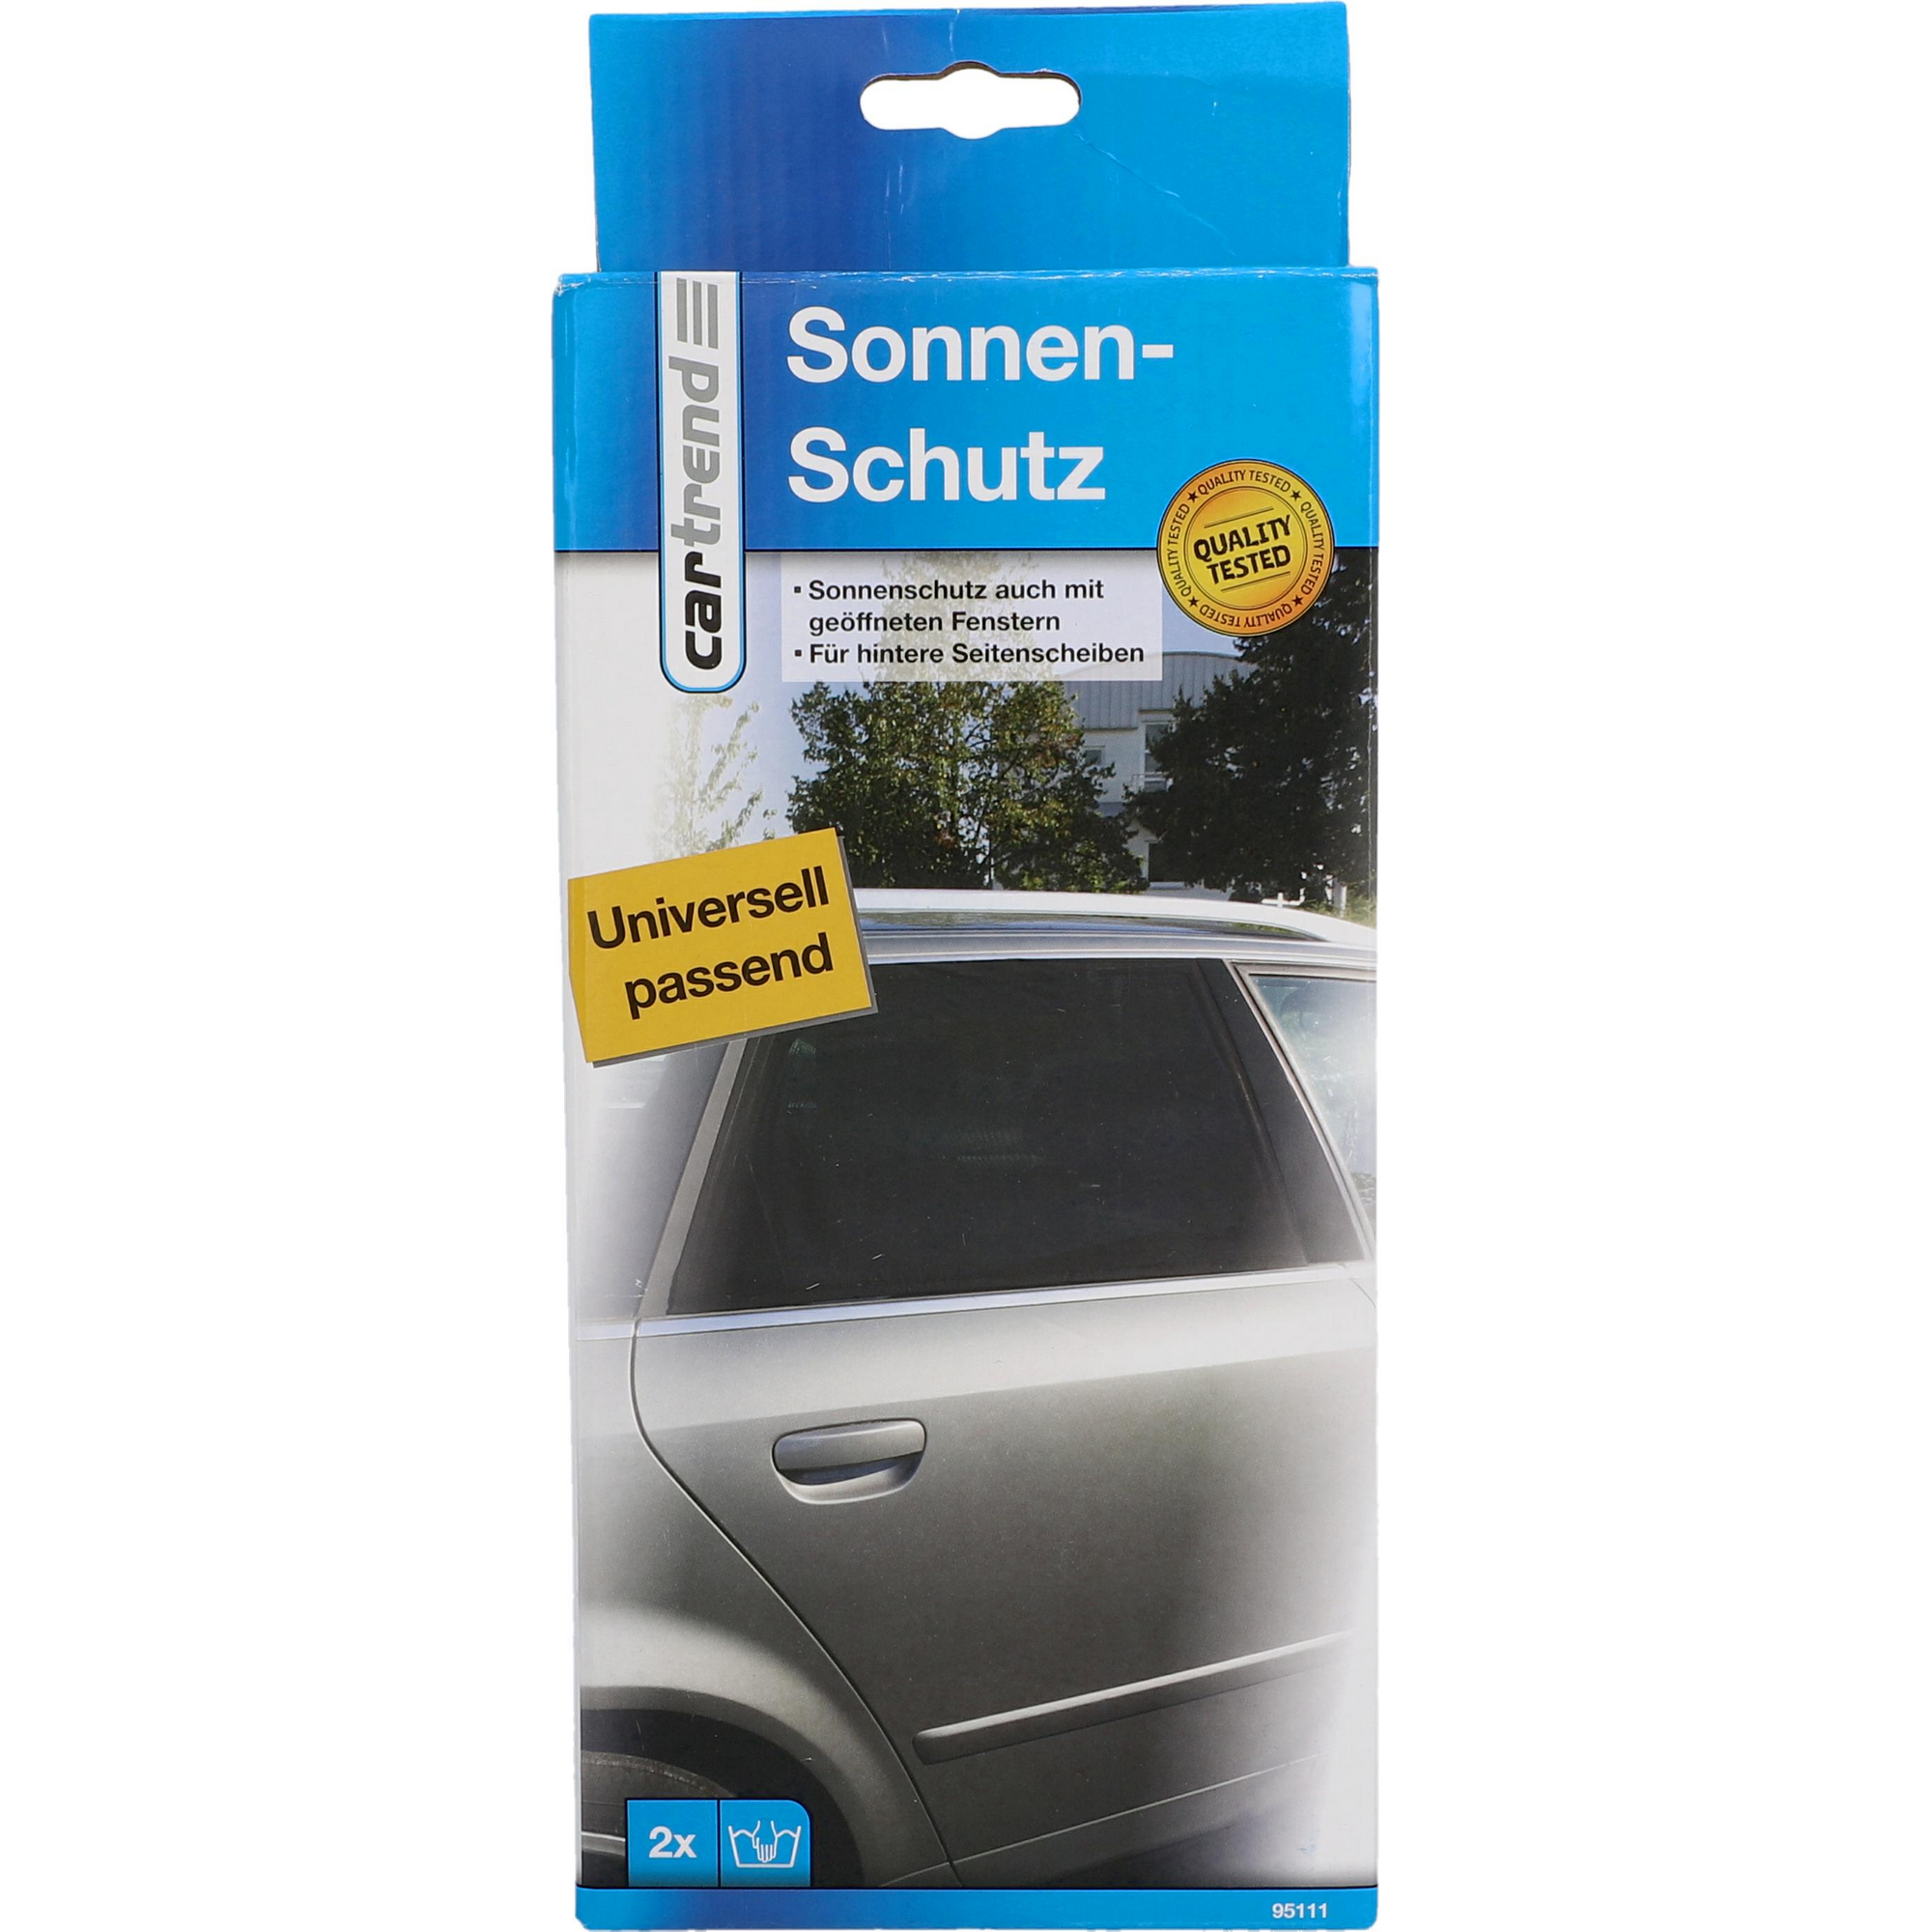 Sonnenschutz Tür-Socke 2-er Set + product picture